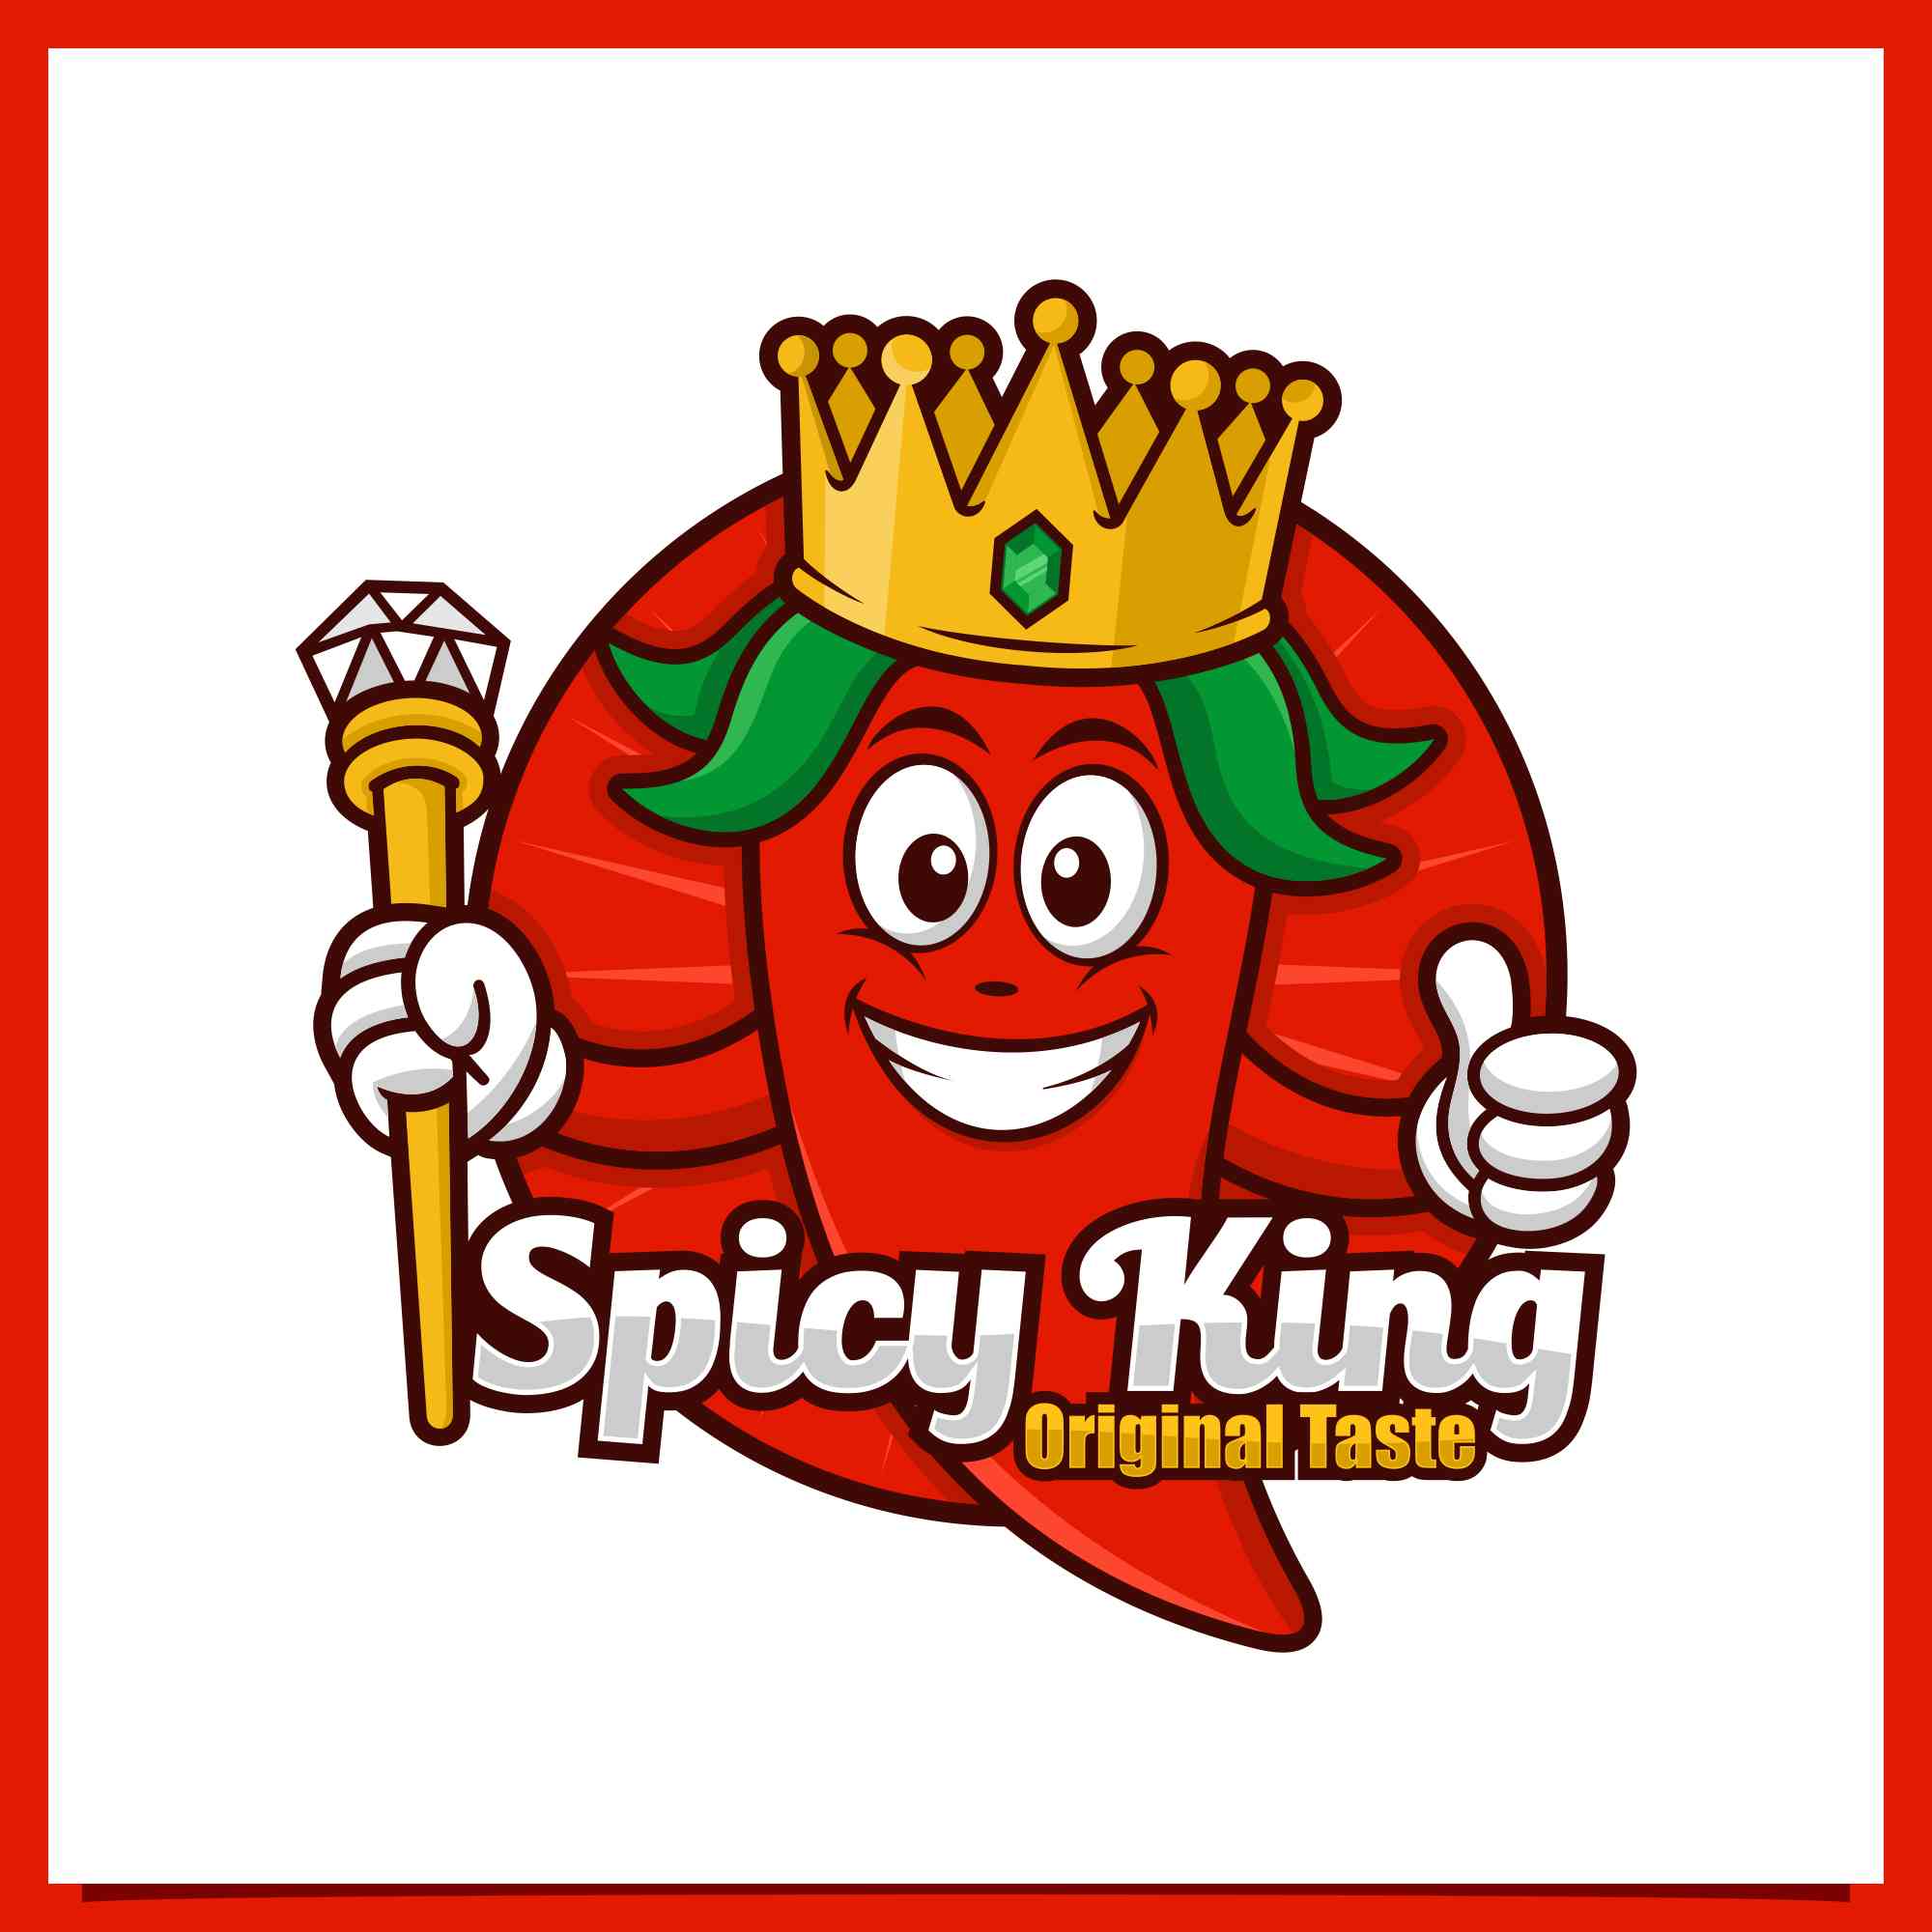 Spicy king logo design illustration - $6 preview image.